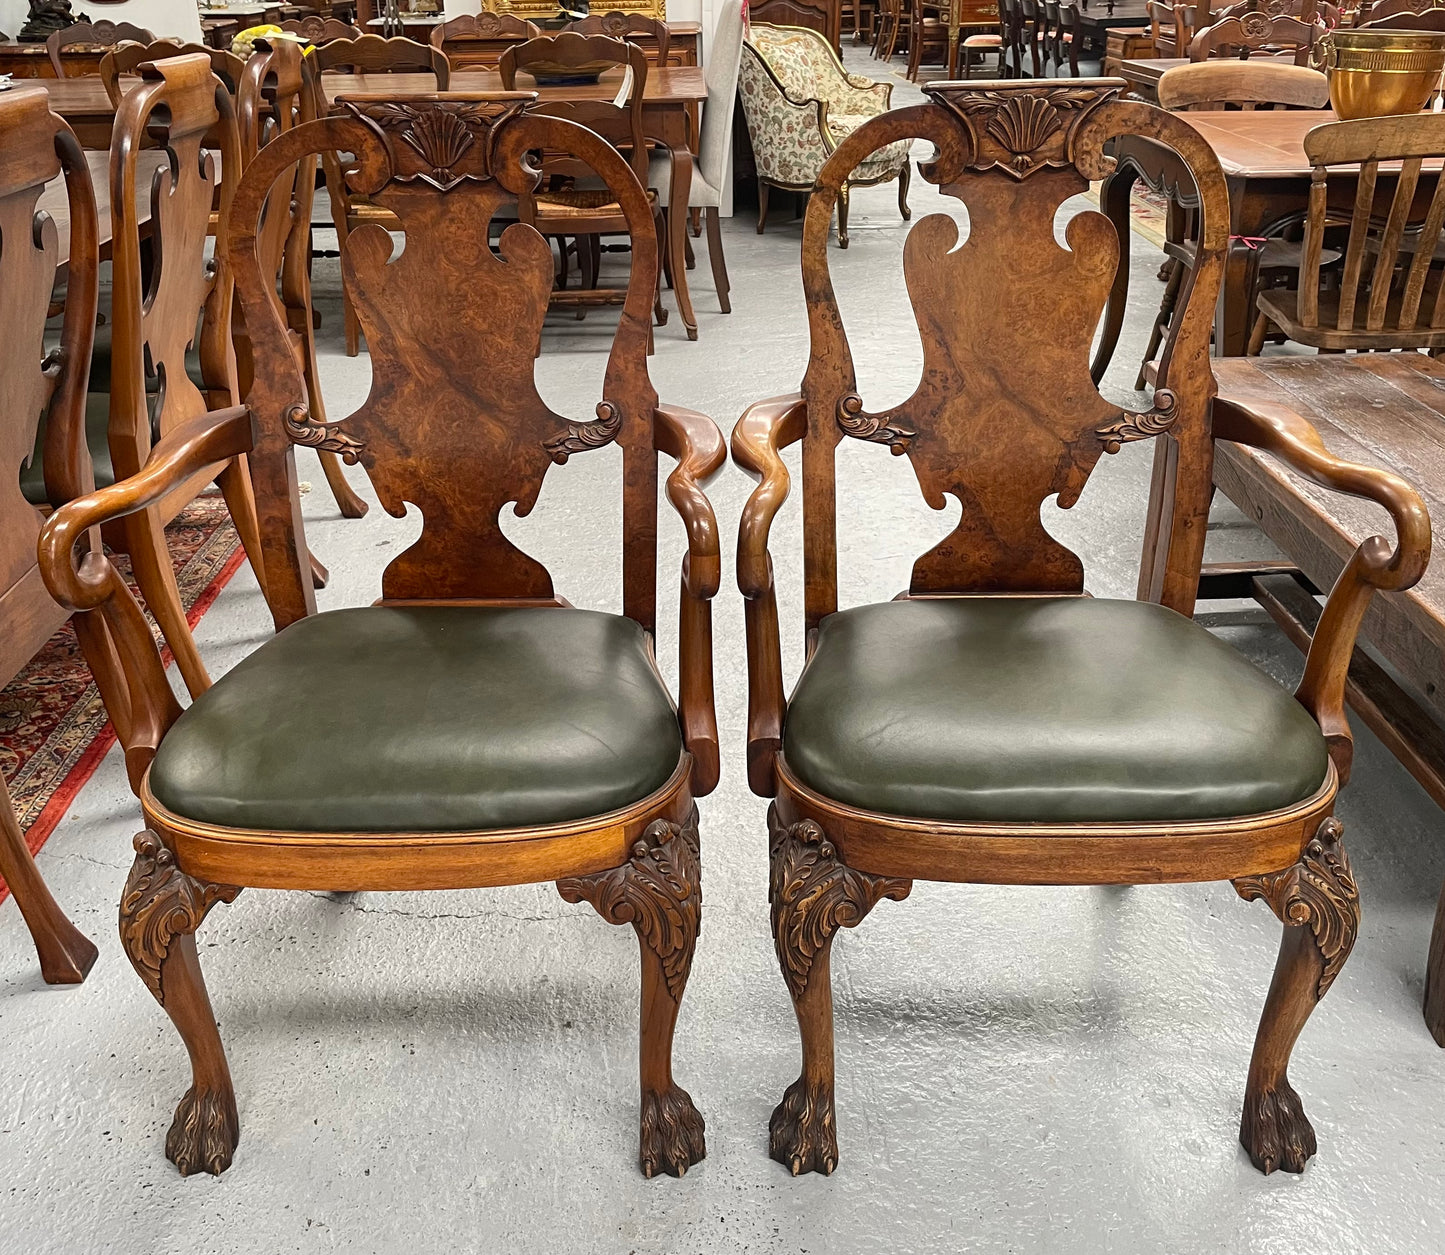 Sensational set of 8 Georgian Style Dining Chairs